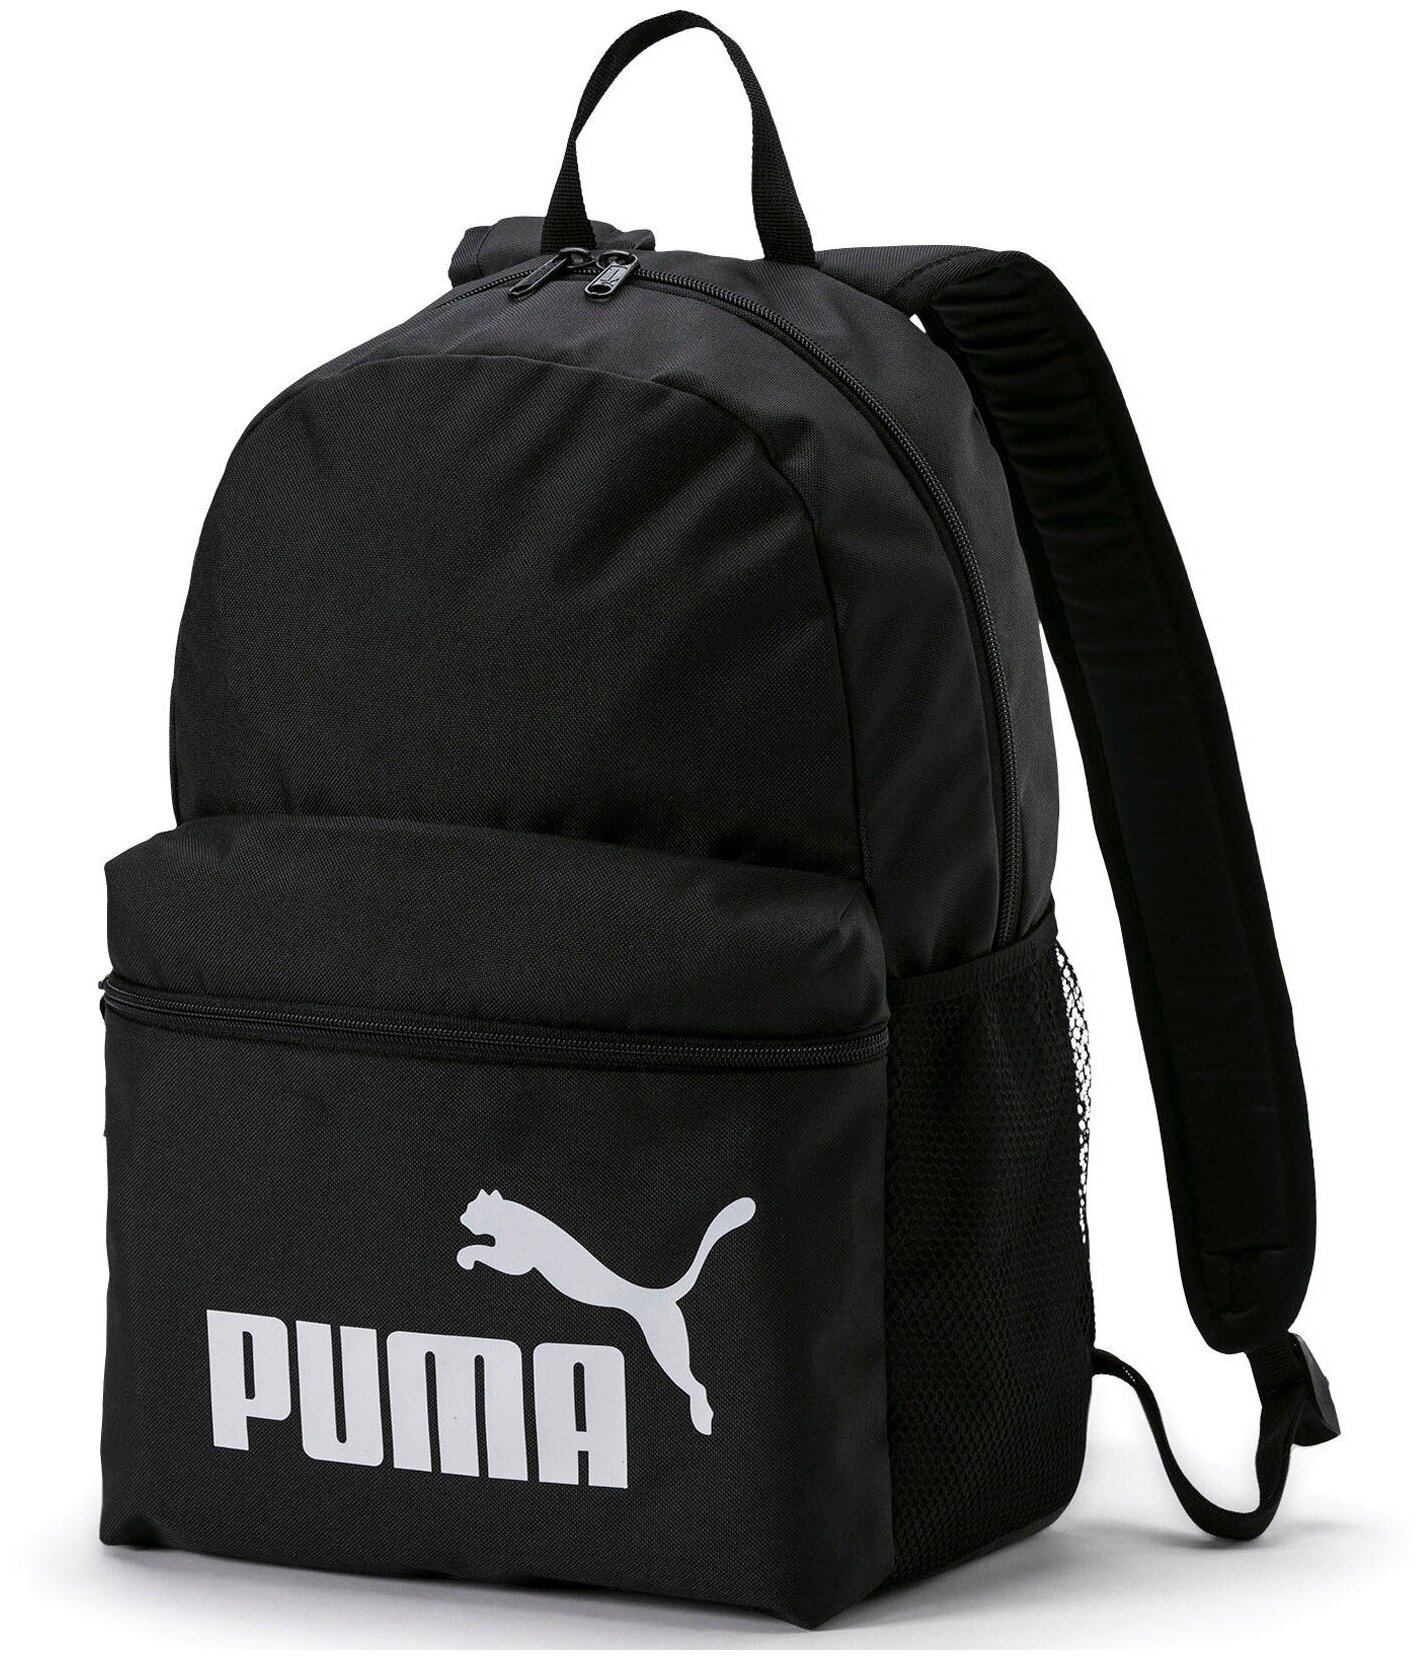 Рюкзак спортивный PUMA Phase Backpack 07548701, черный